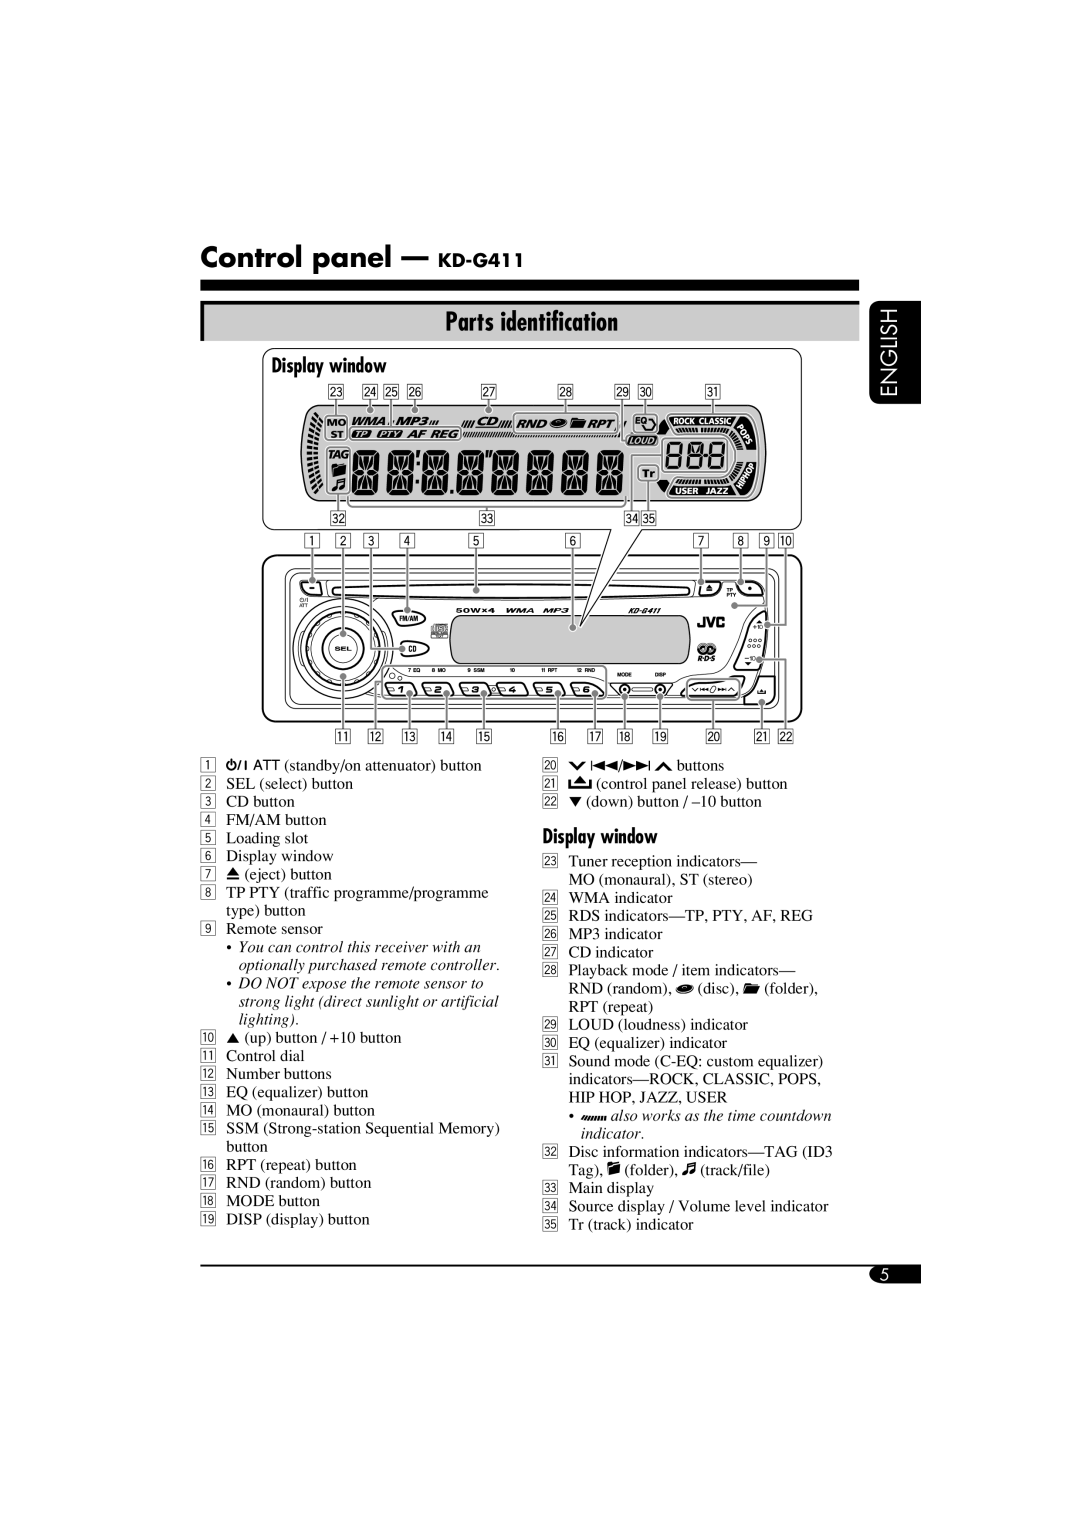 JVC manual Control panel - KD-G411, Parts identification, English, Display window 